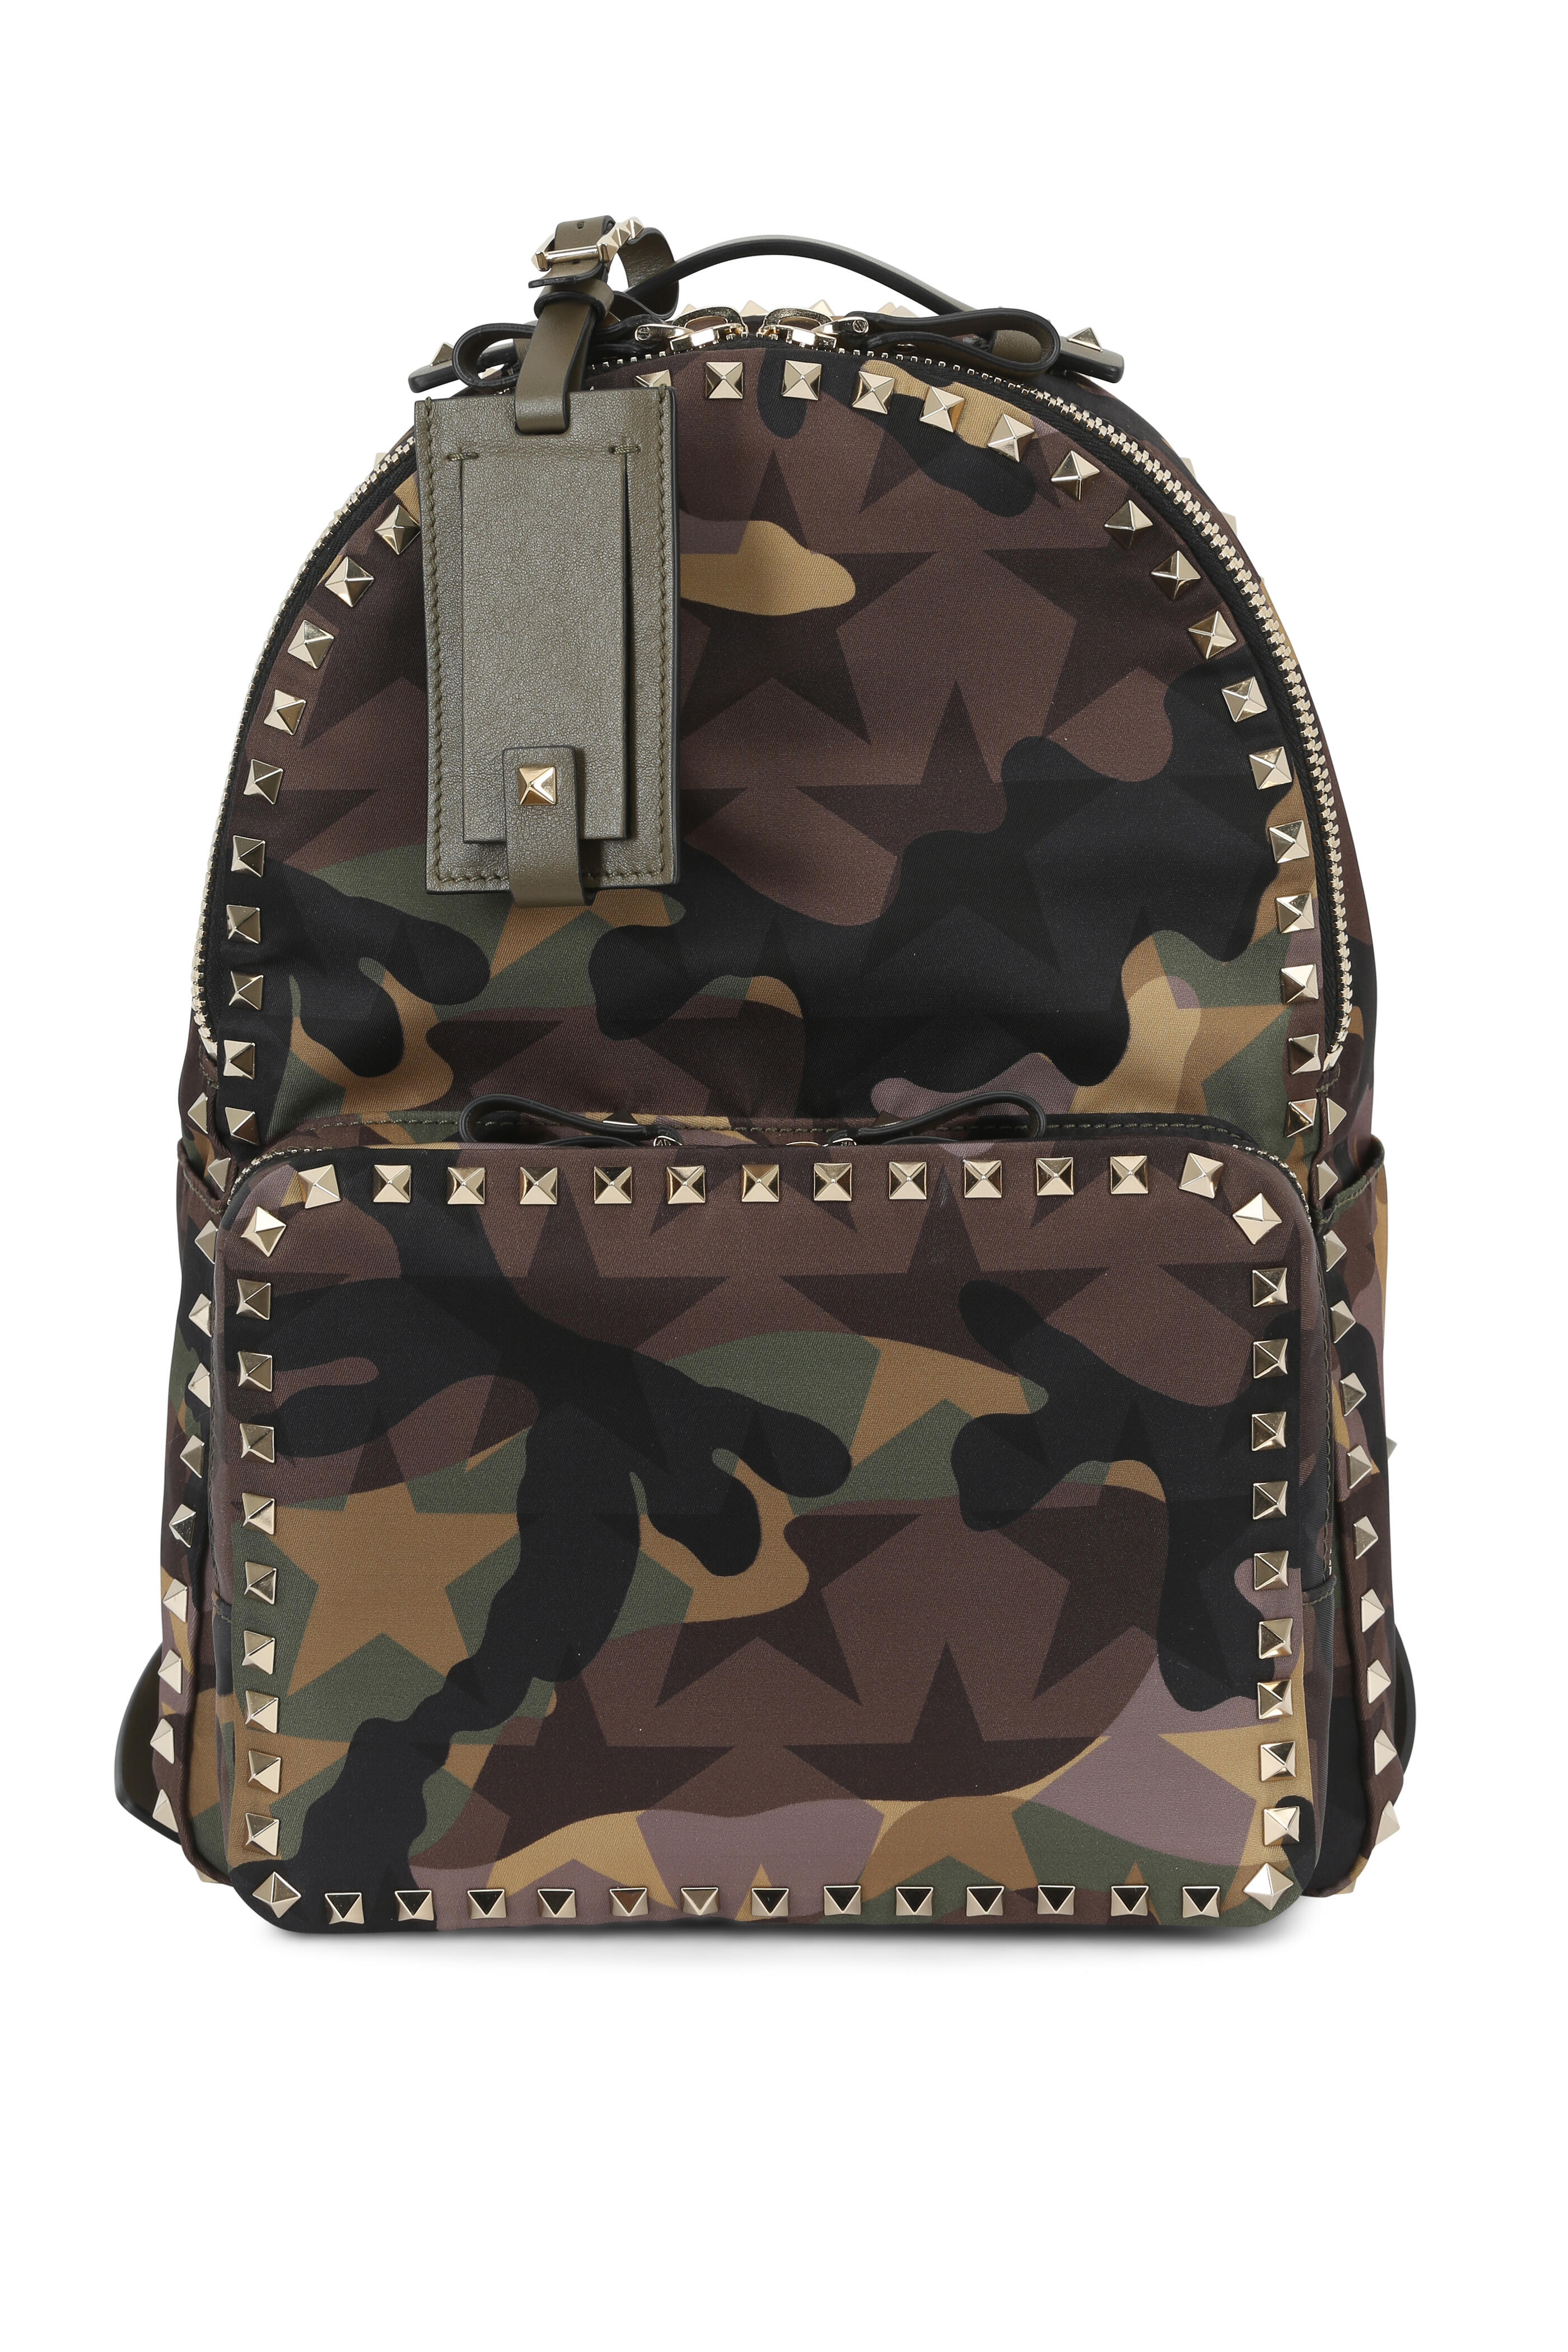 Valentino Garavani Rockstud Camouflage Backpack - Farfetch